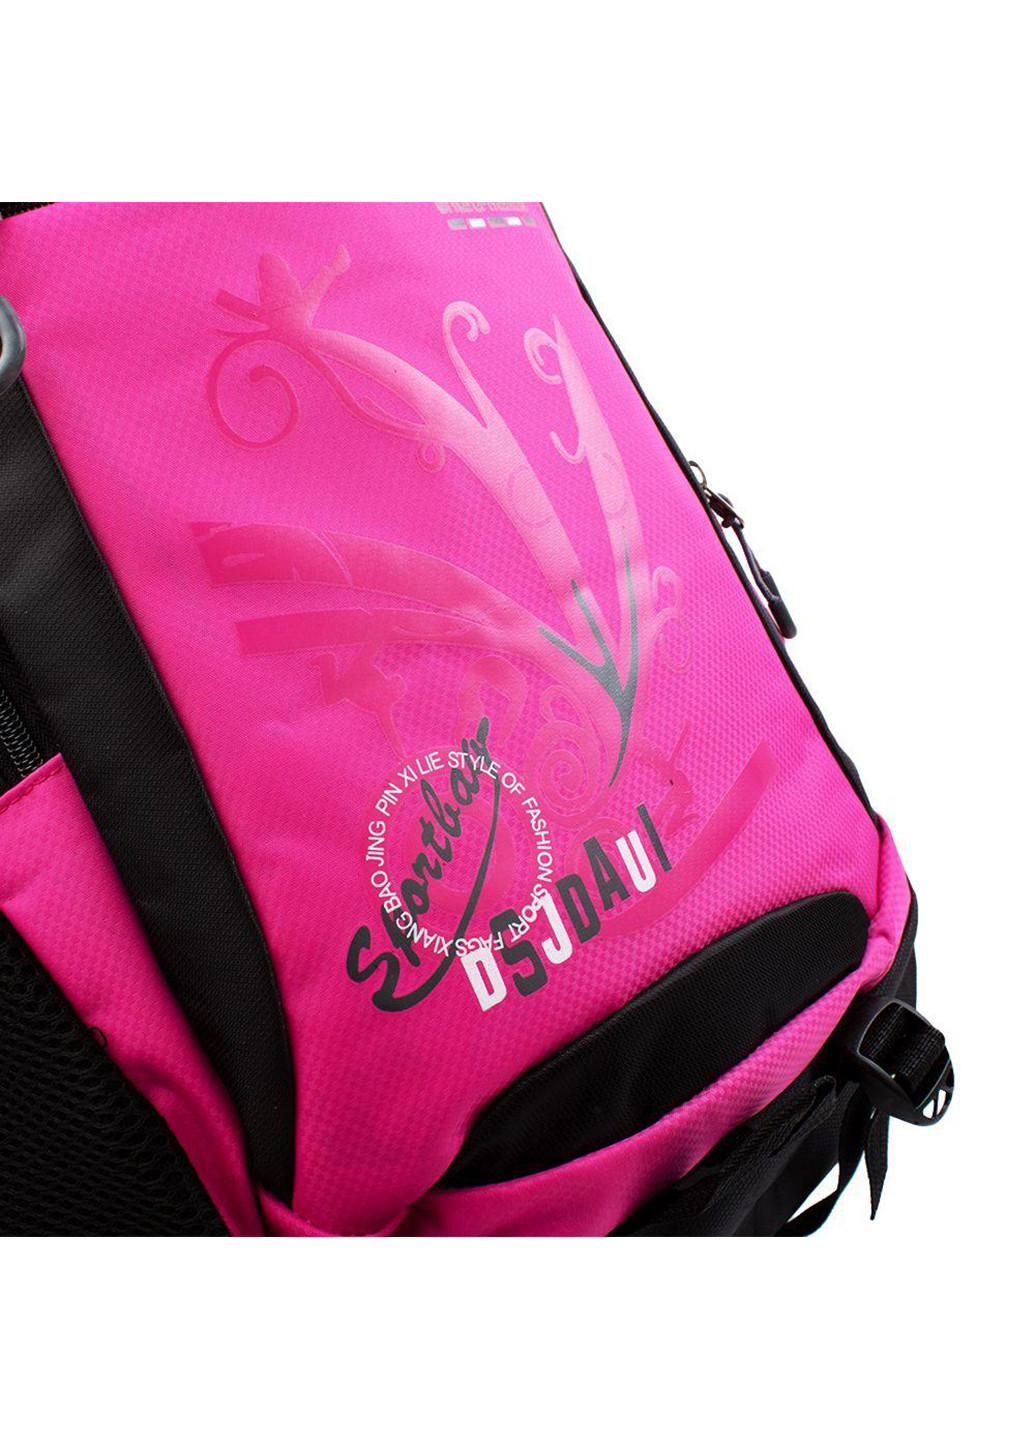 Жіночий спортивний рюкзак 35х51х14 см Valiria Fashion (242188121)